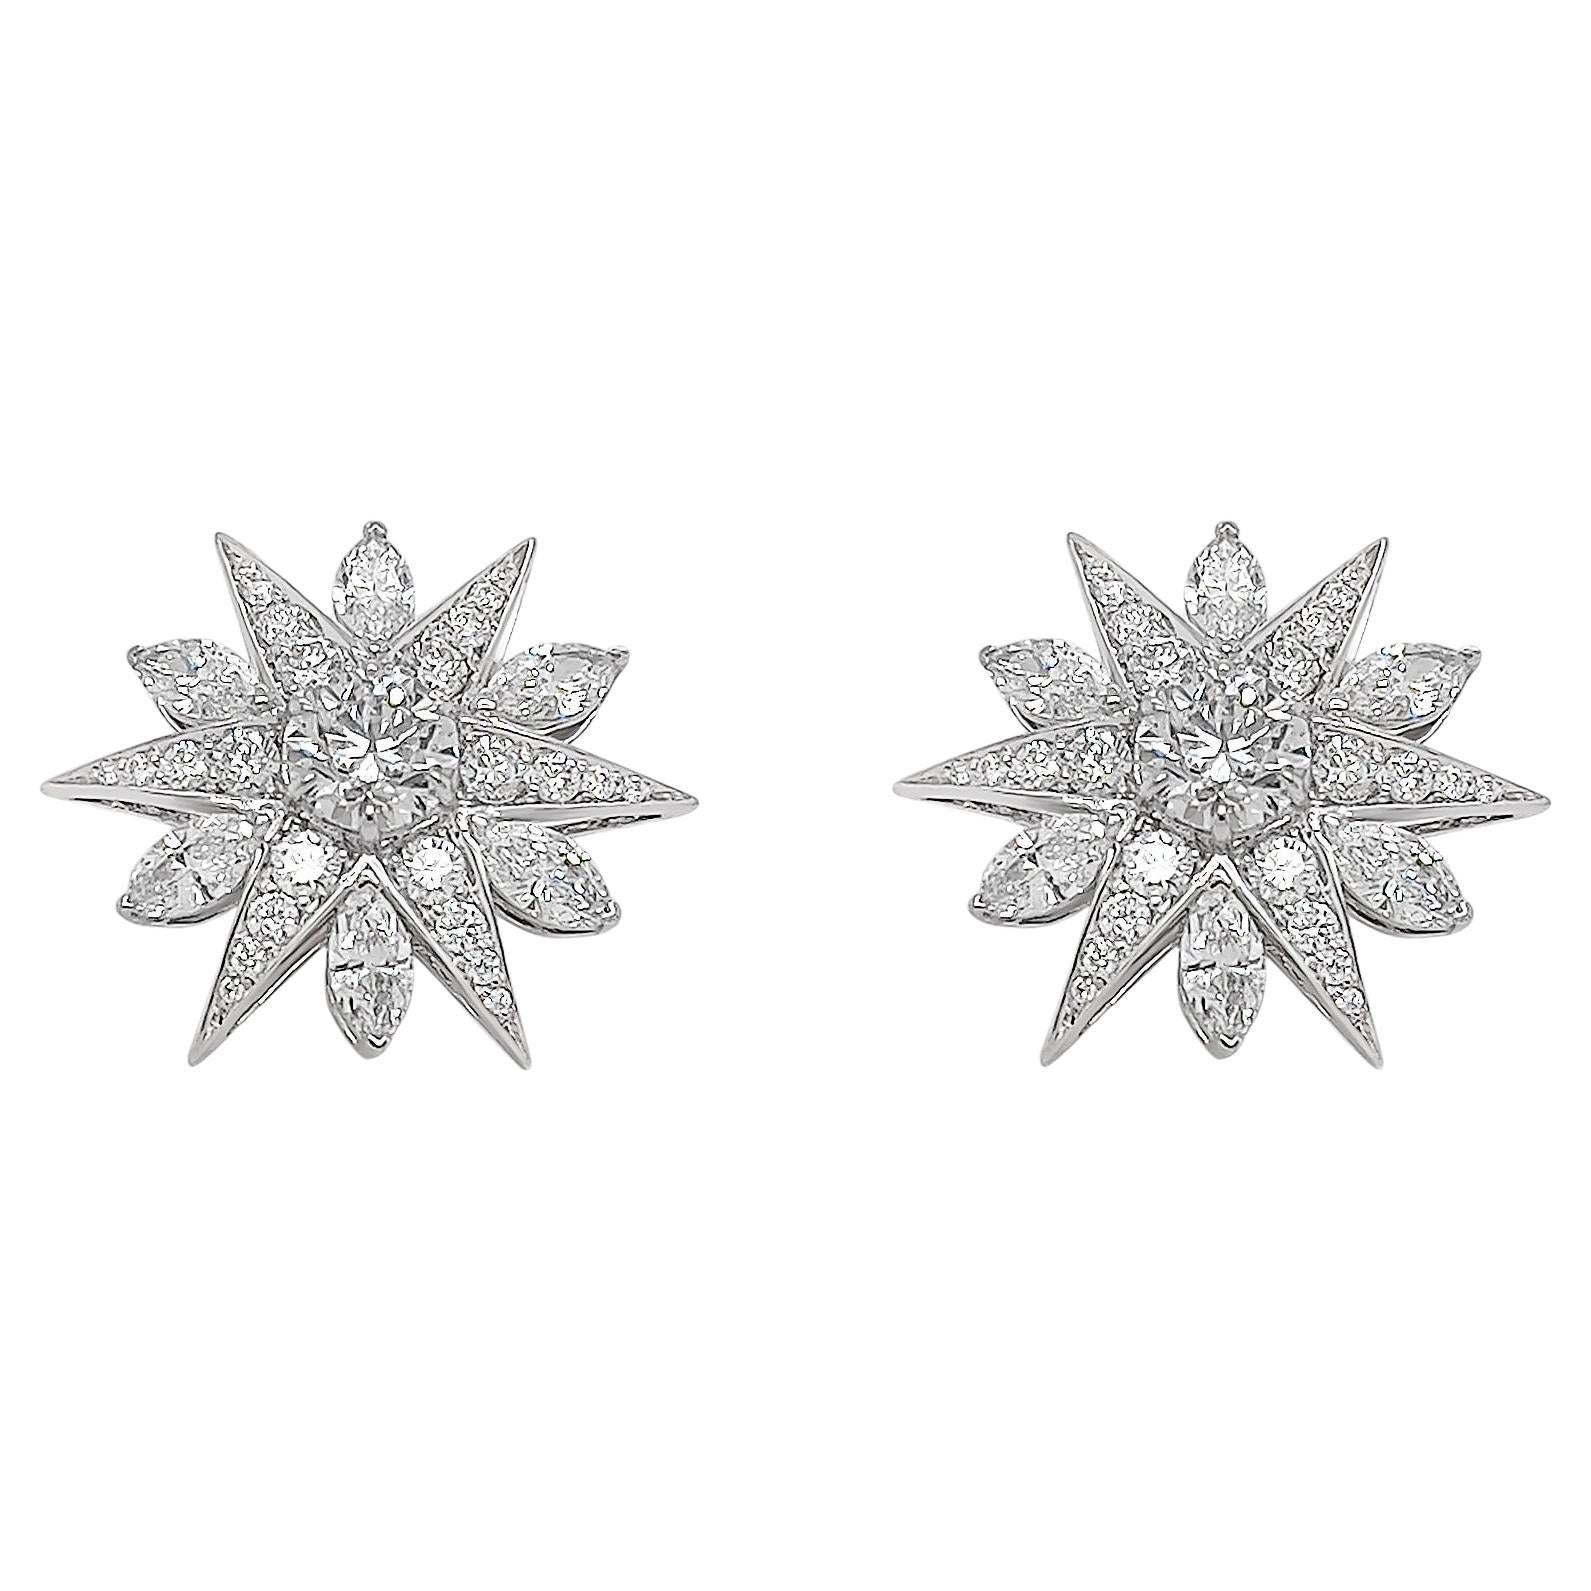 2.995 Carats Diamond Cluster Earrings in 18k White Gold 